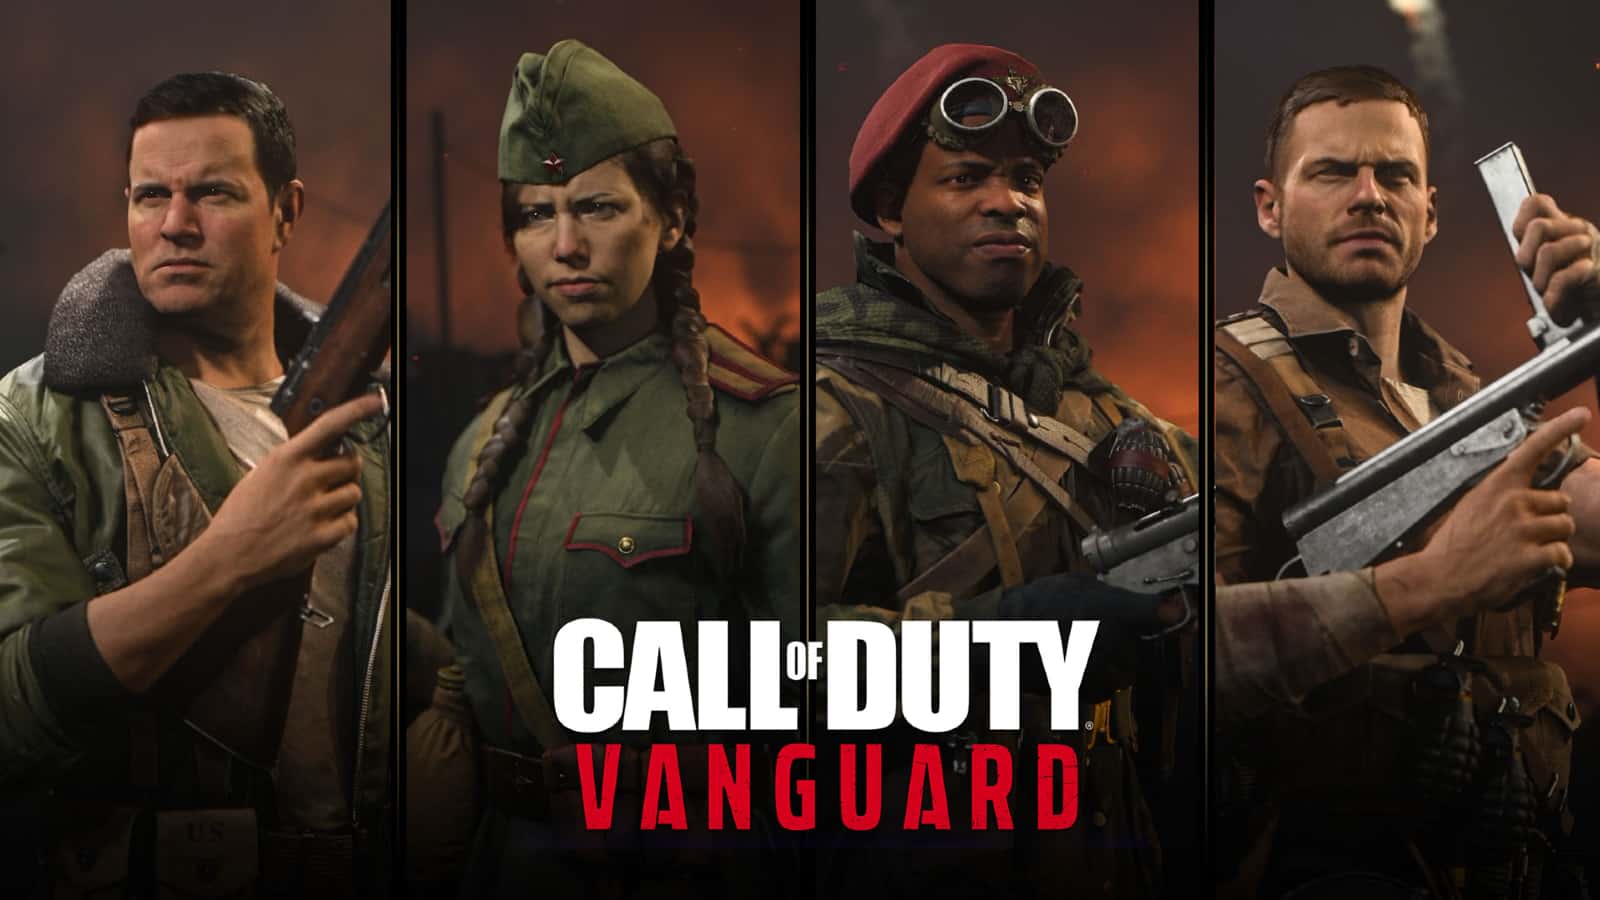 Pop Goes The Nightingale achievement in Call of Duty: Vanguard